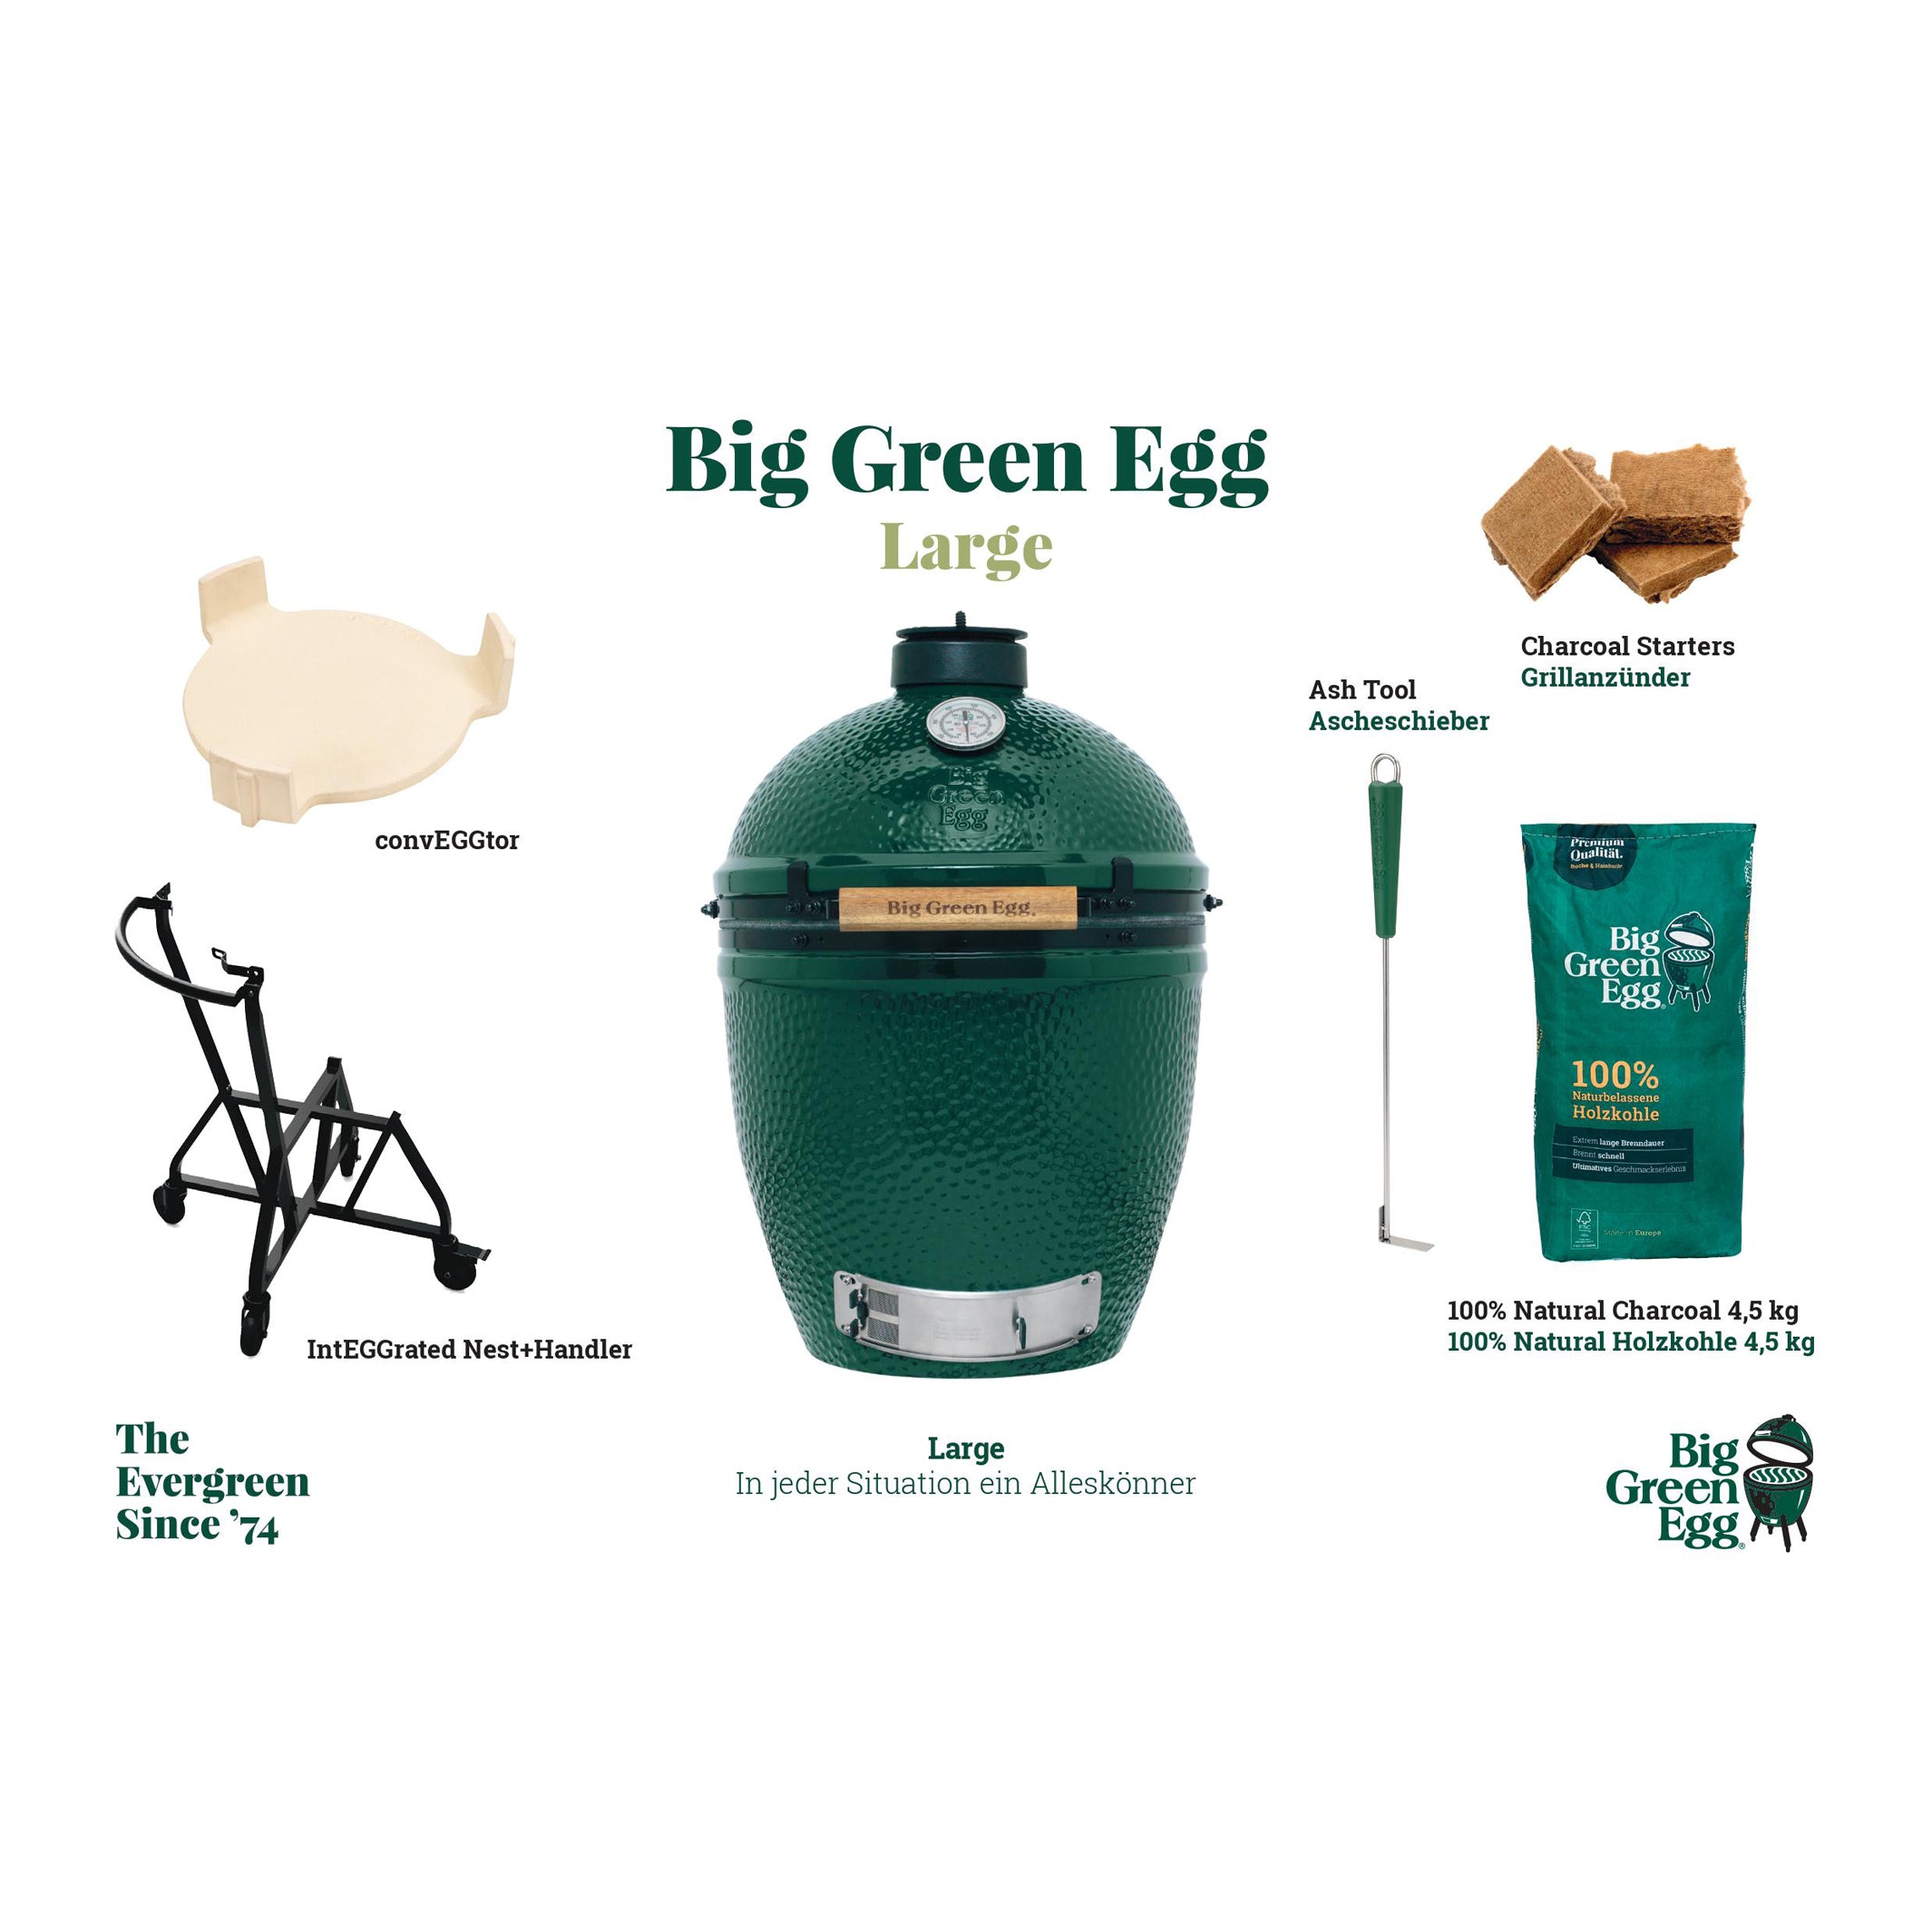 BIG GREEN EGG LARGE | KERAMIKGRILL | STARTER-PAKET | Big Green Egg